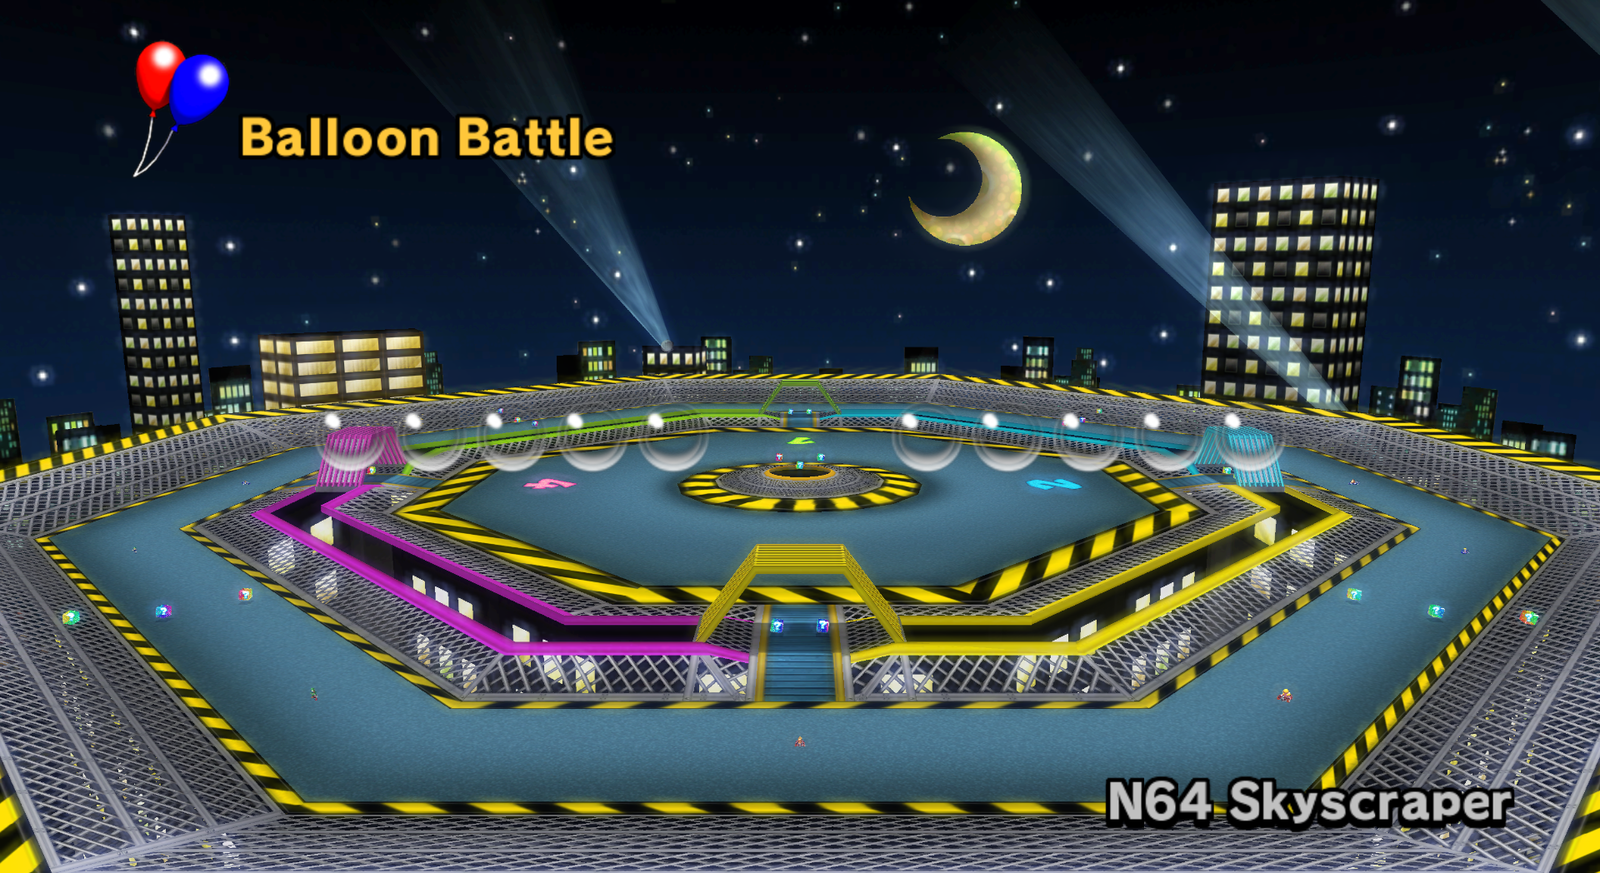 Mario Kart 64 - Battle Mode Arena Skyscraper landscape.